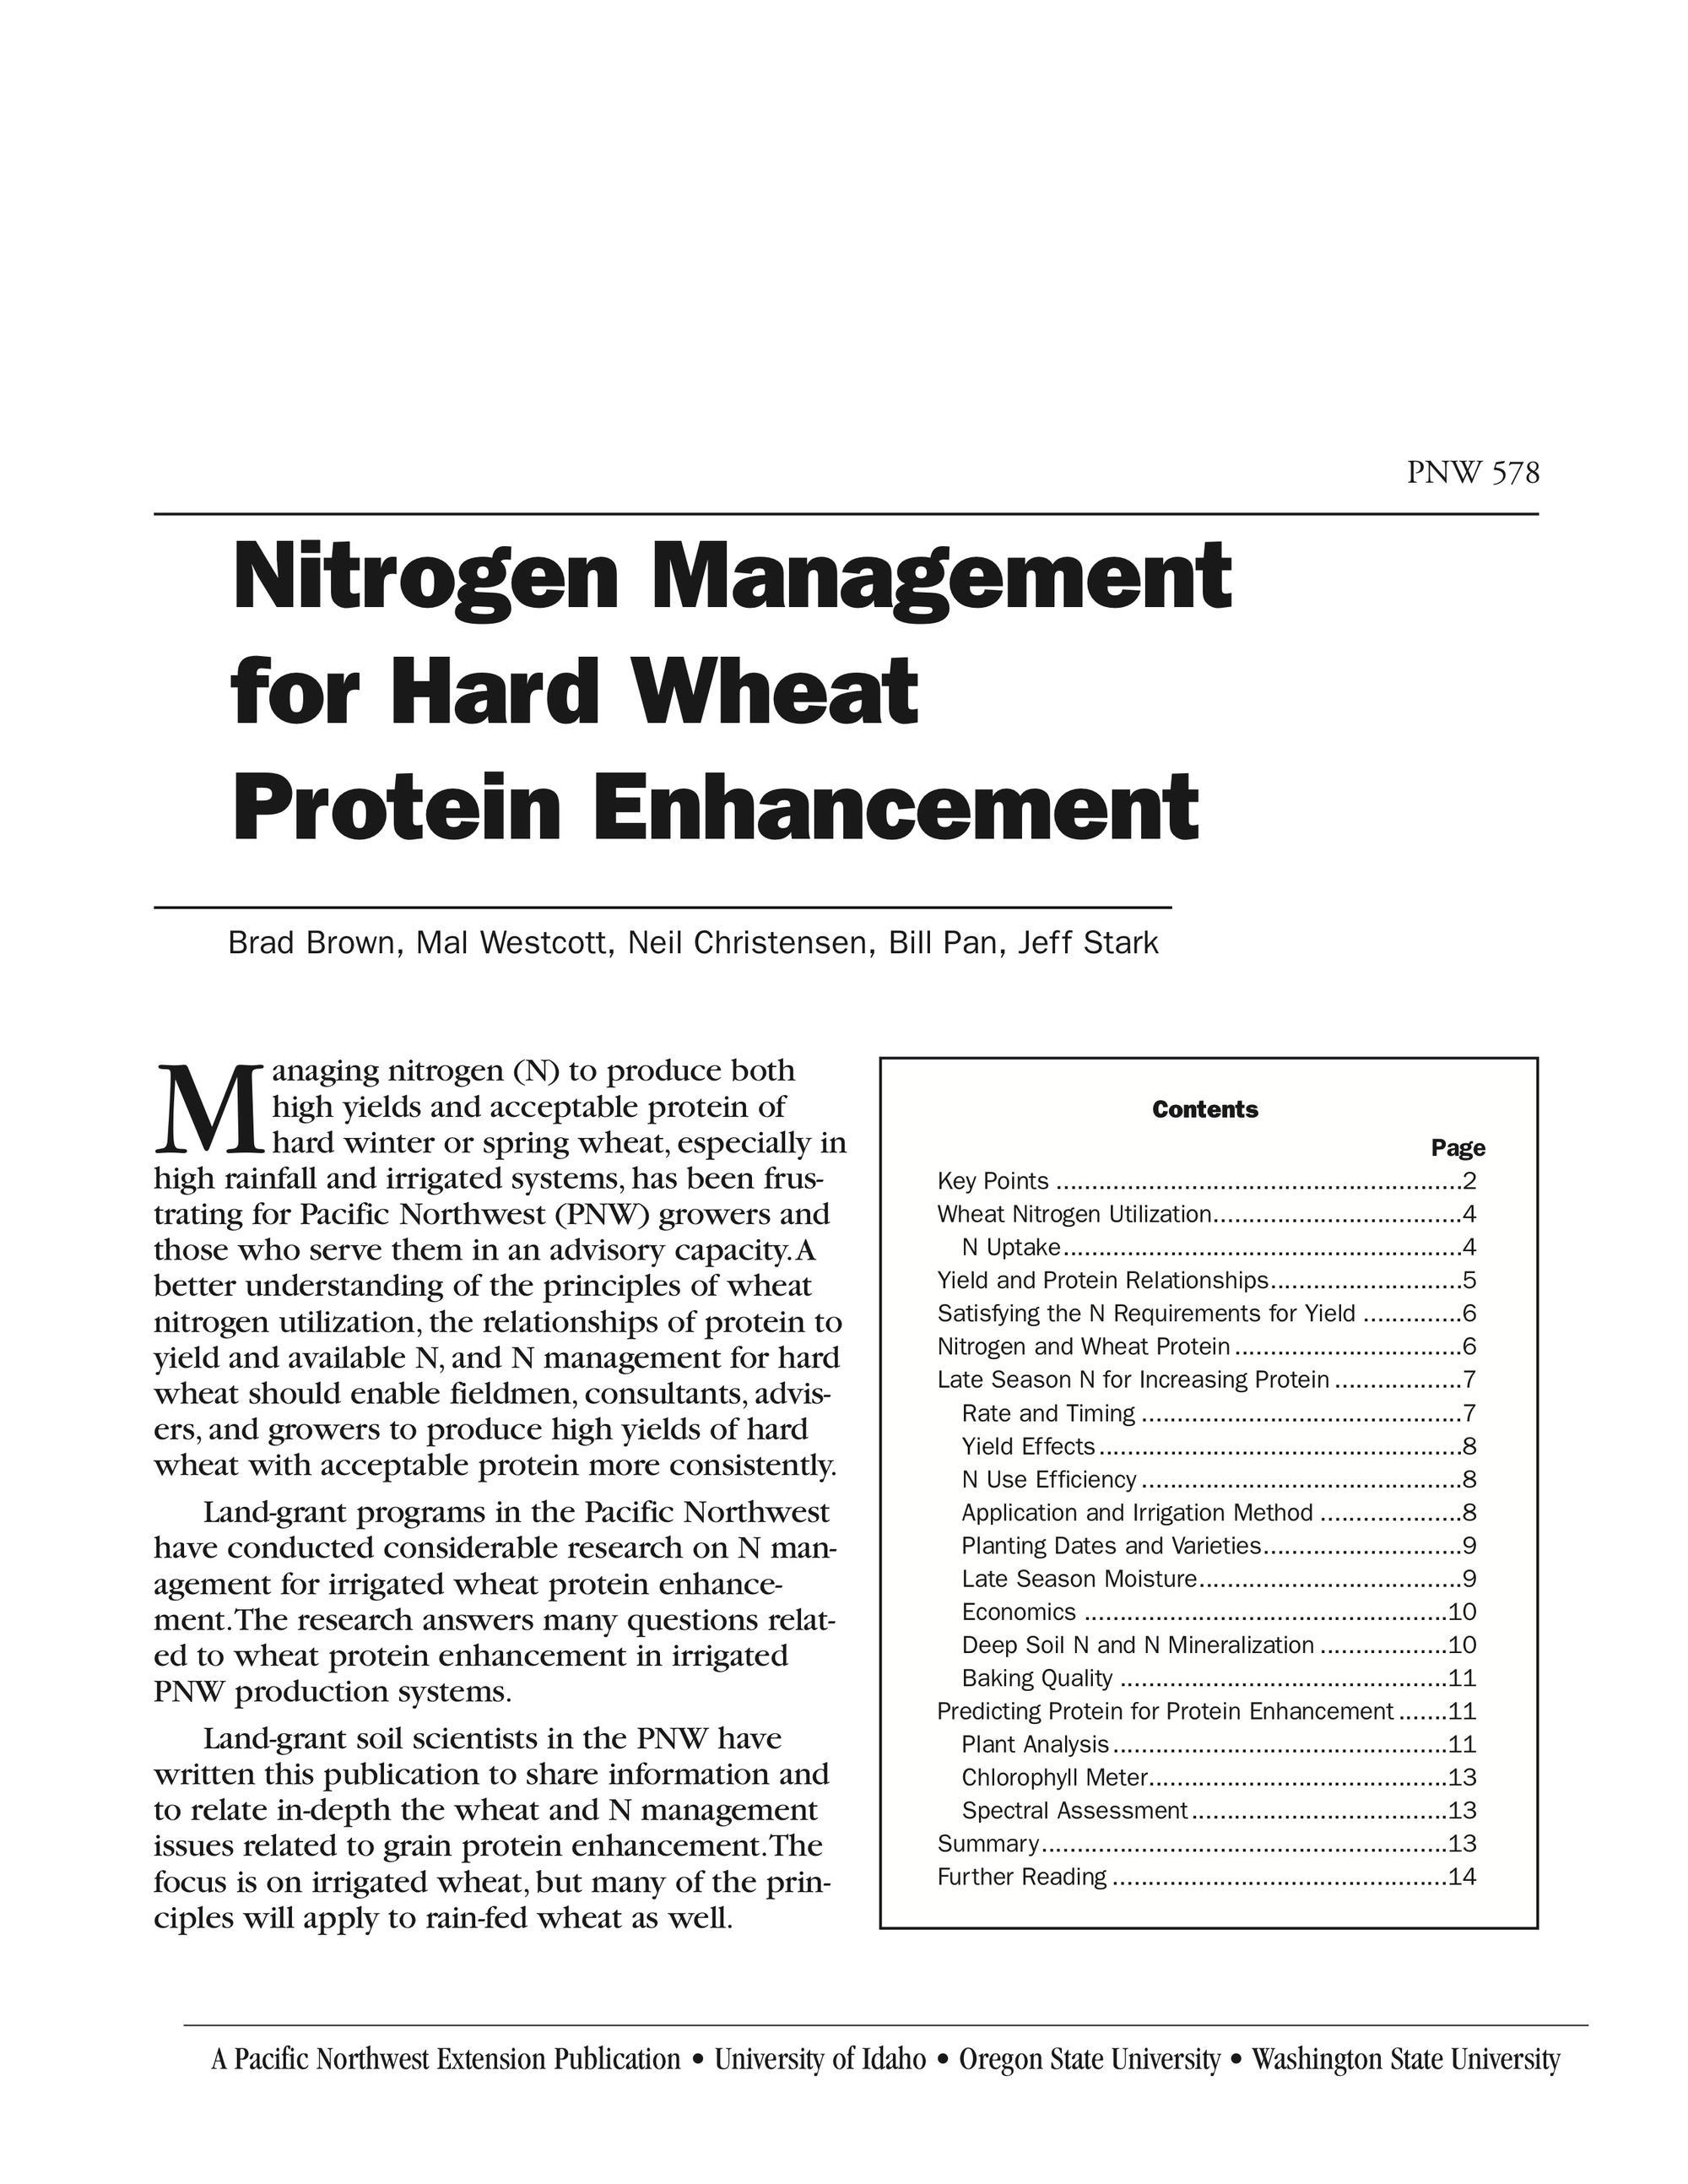 Image of Nitrogen Management for Hard Wheat Protein Enhancement publication